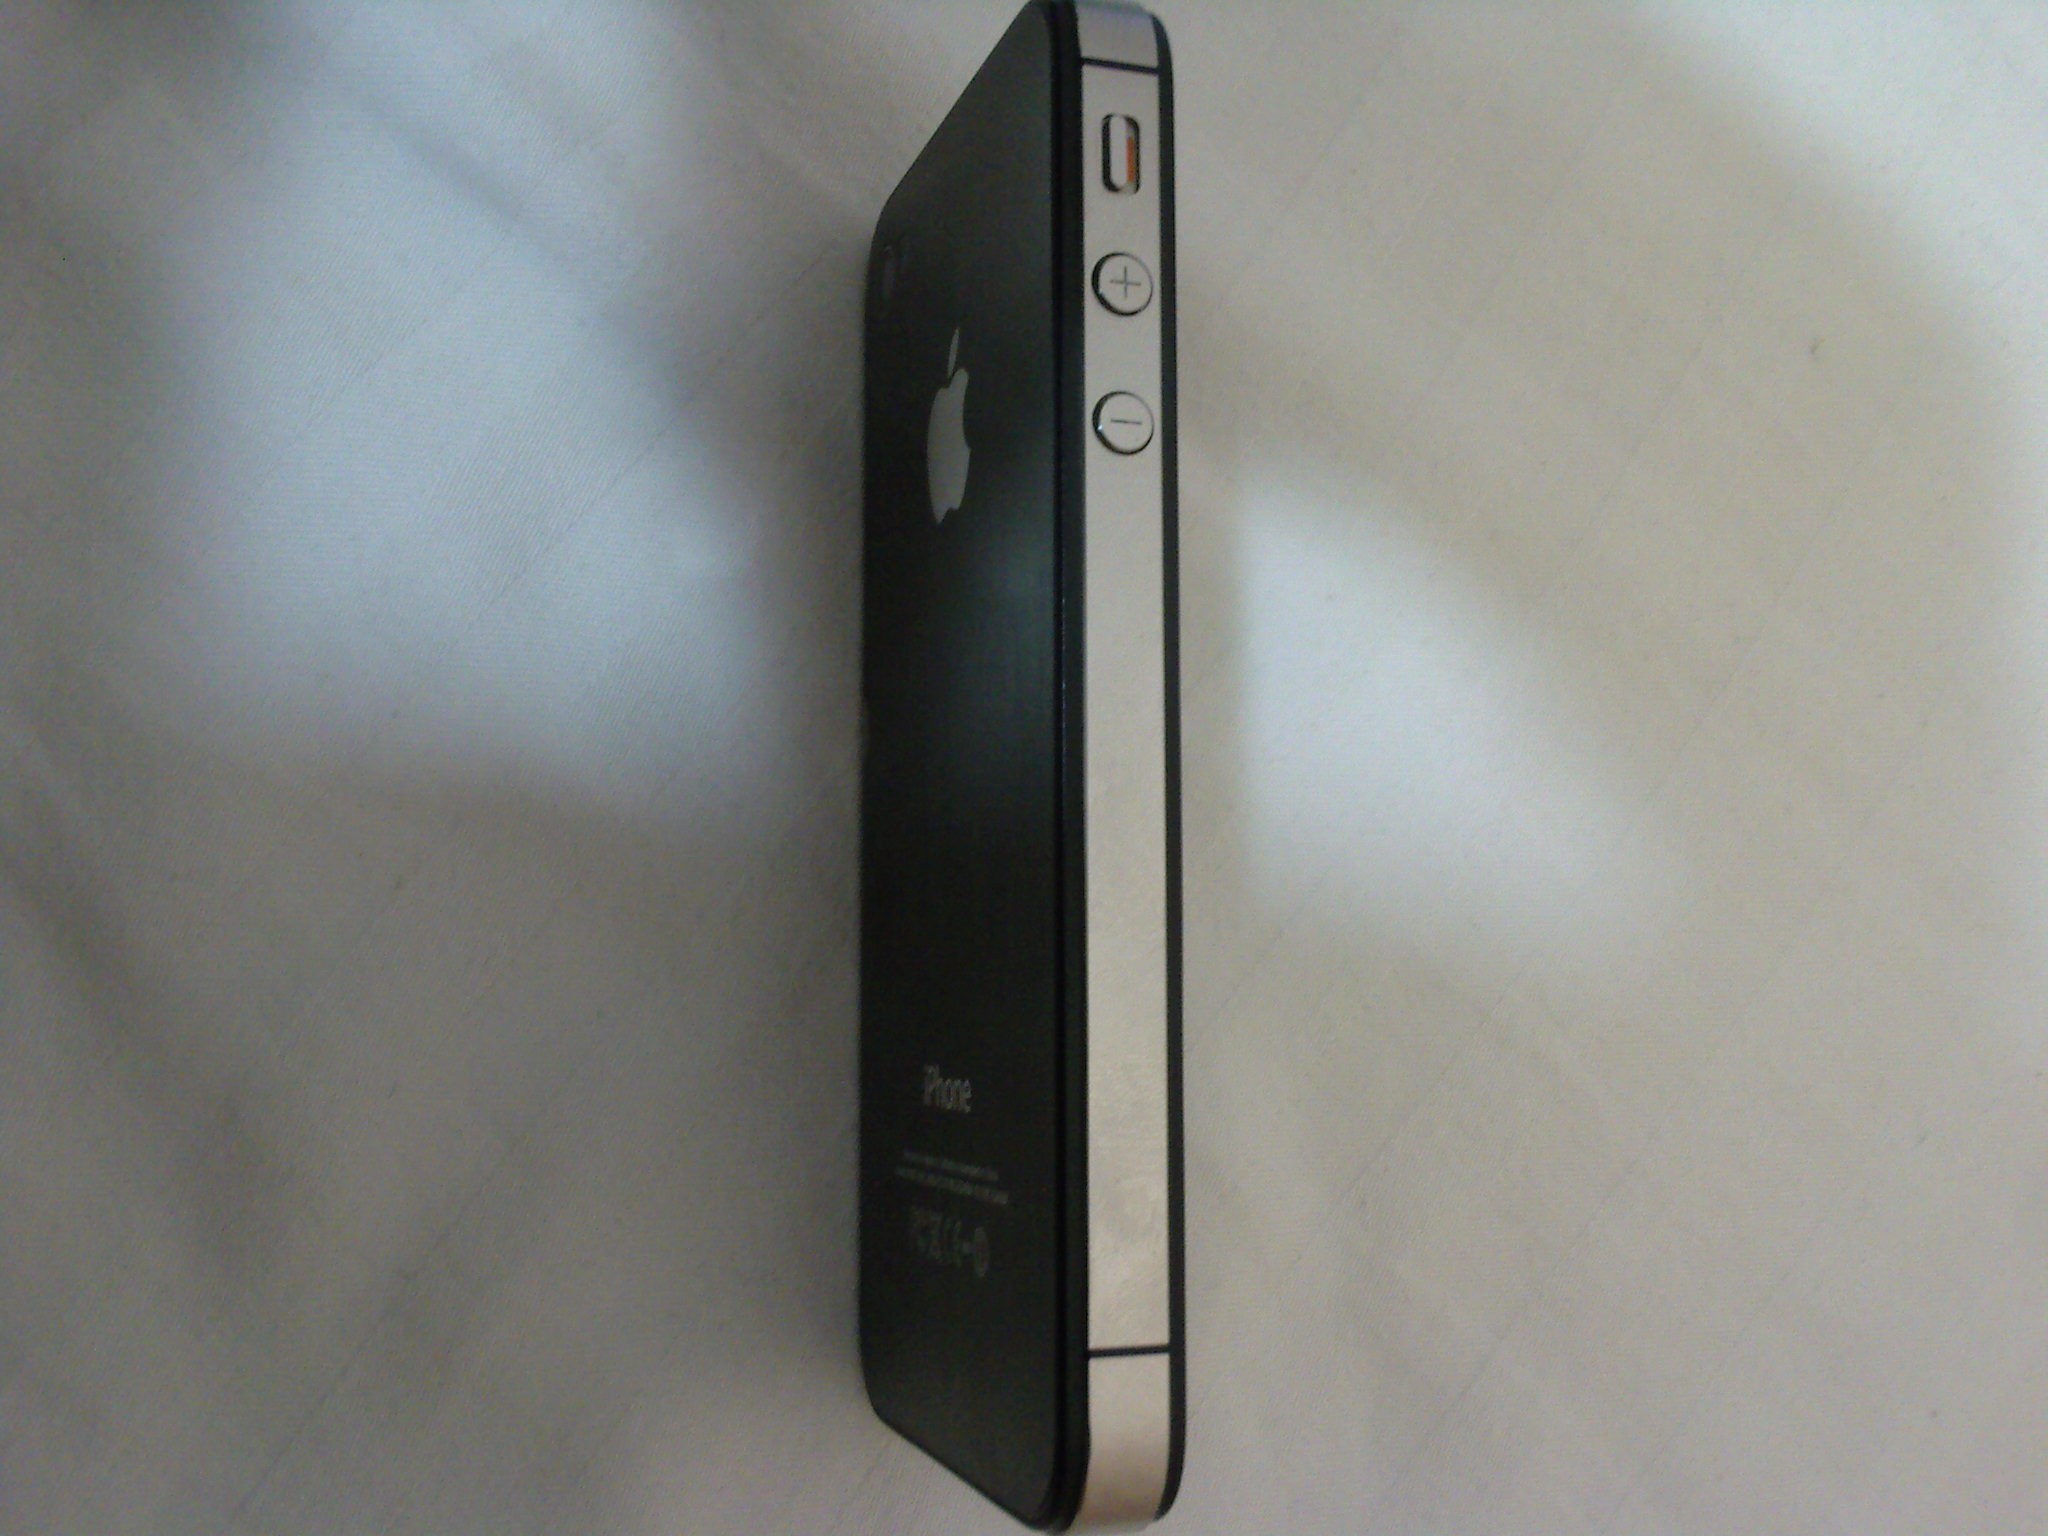  Iphone 4s 16 Gb Simfree Siyah